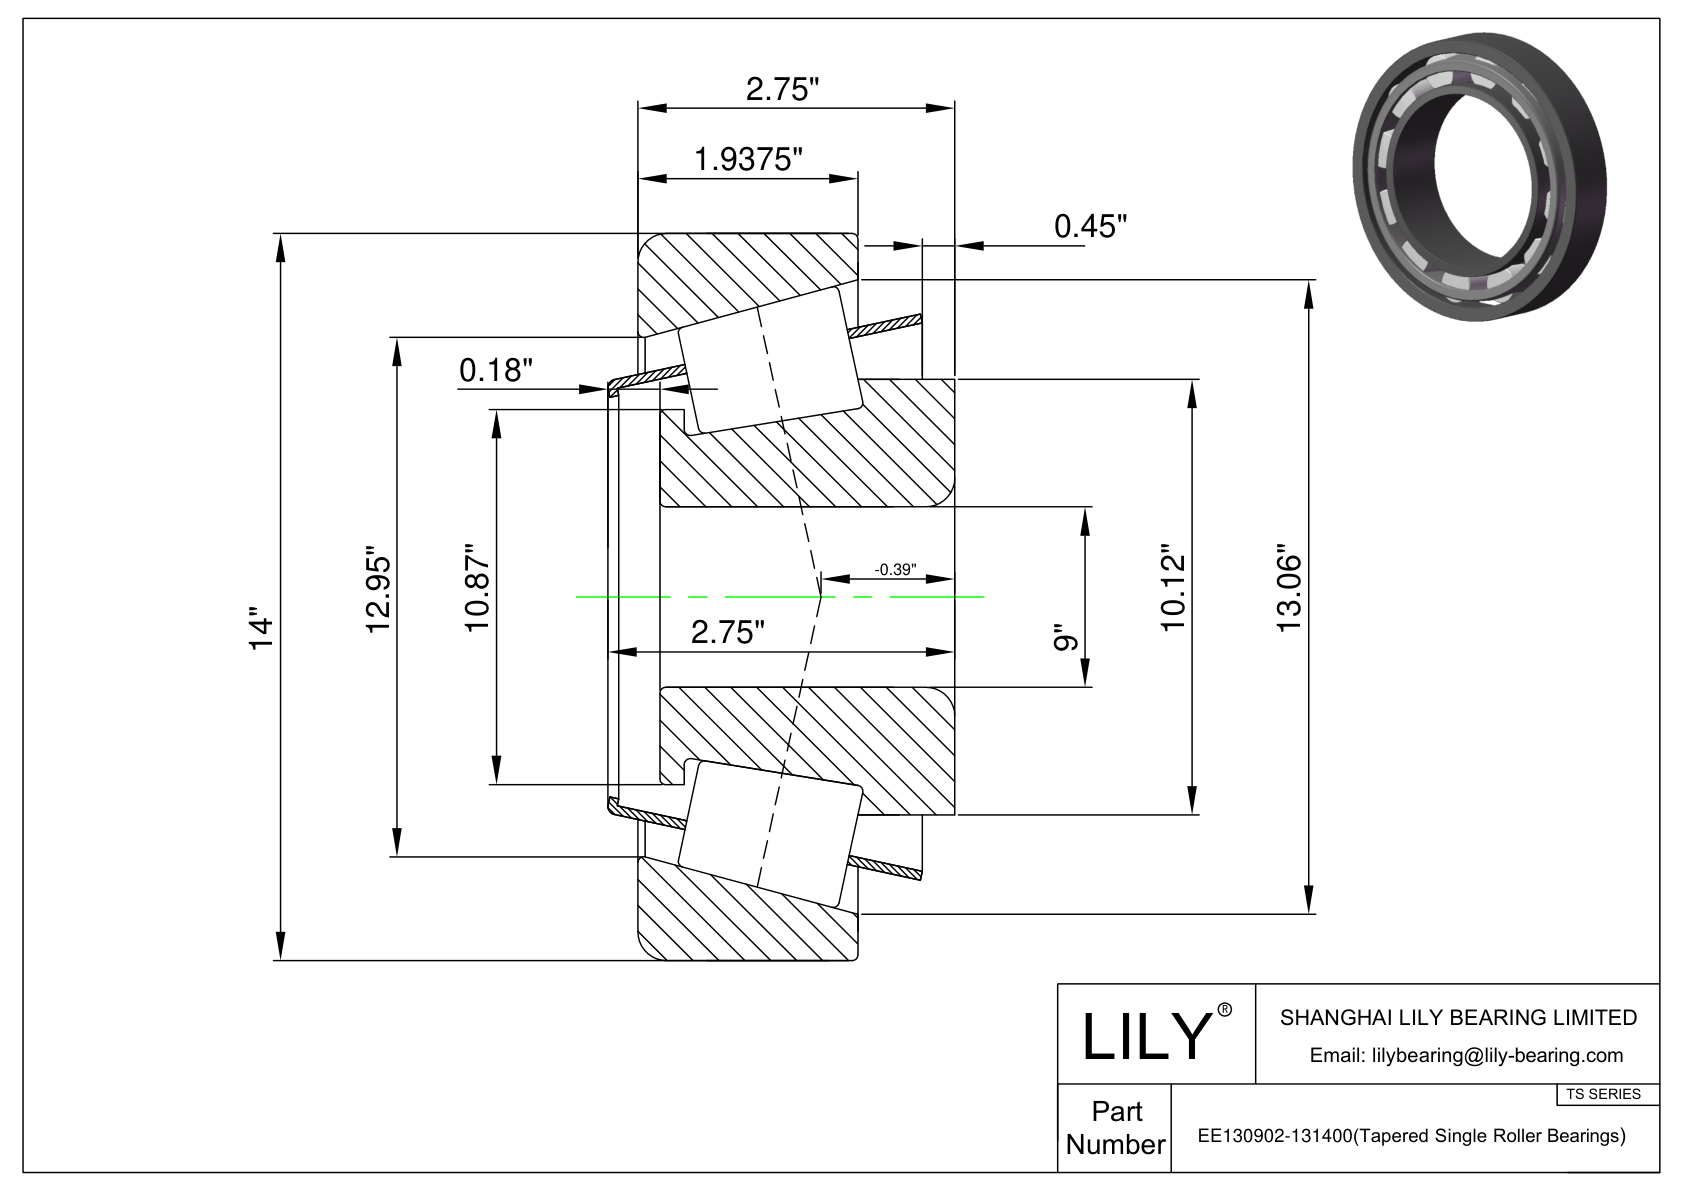 EE130902-131400 TS系列(圆锥单滚子轴承)(英制) CAD图形